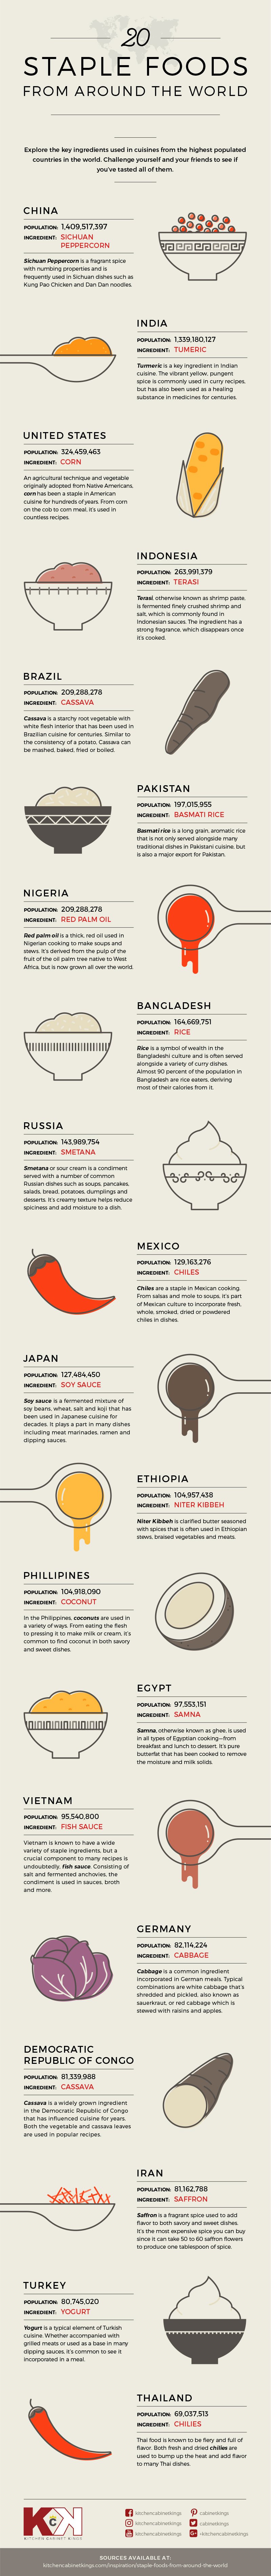 Staple Foods Around the World